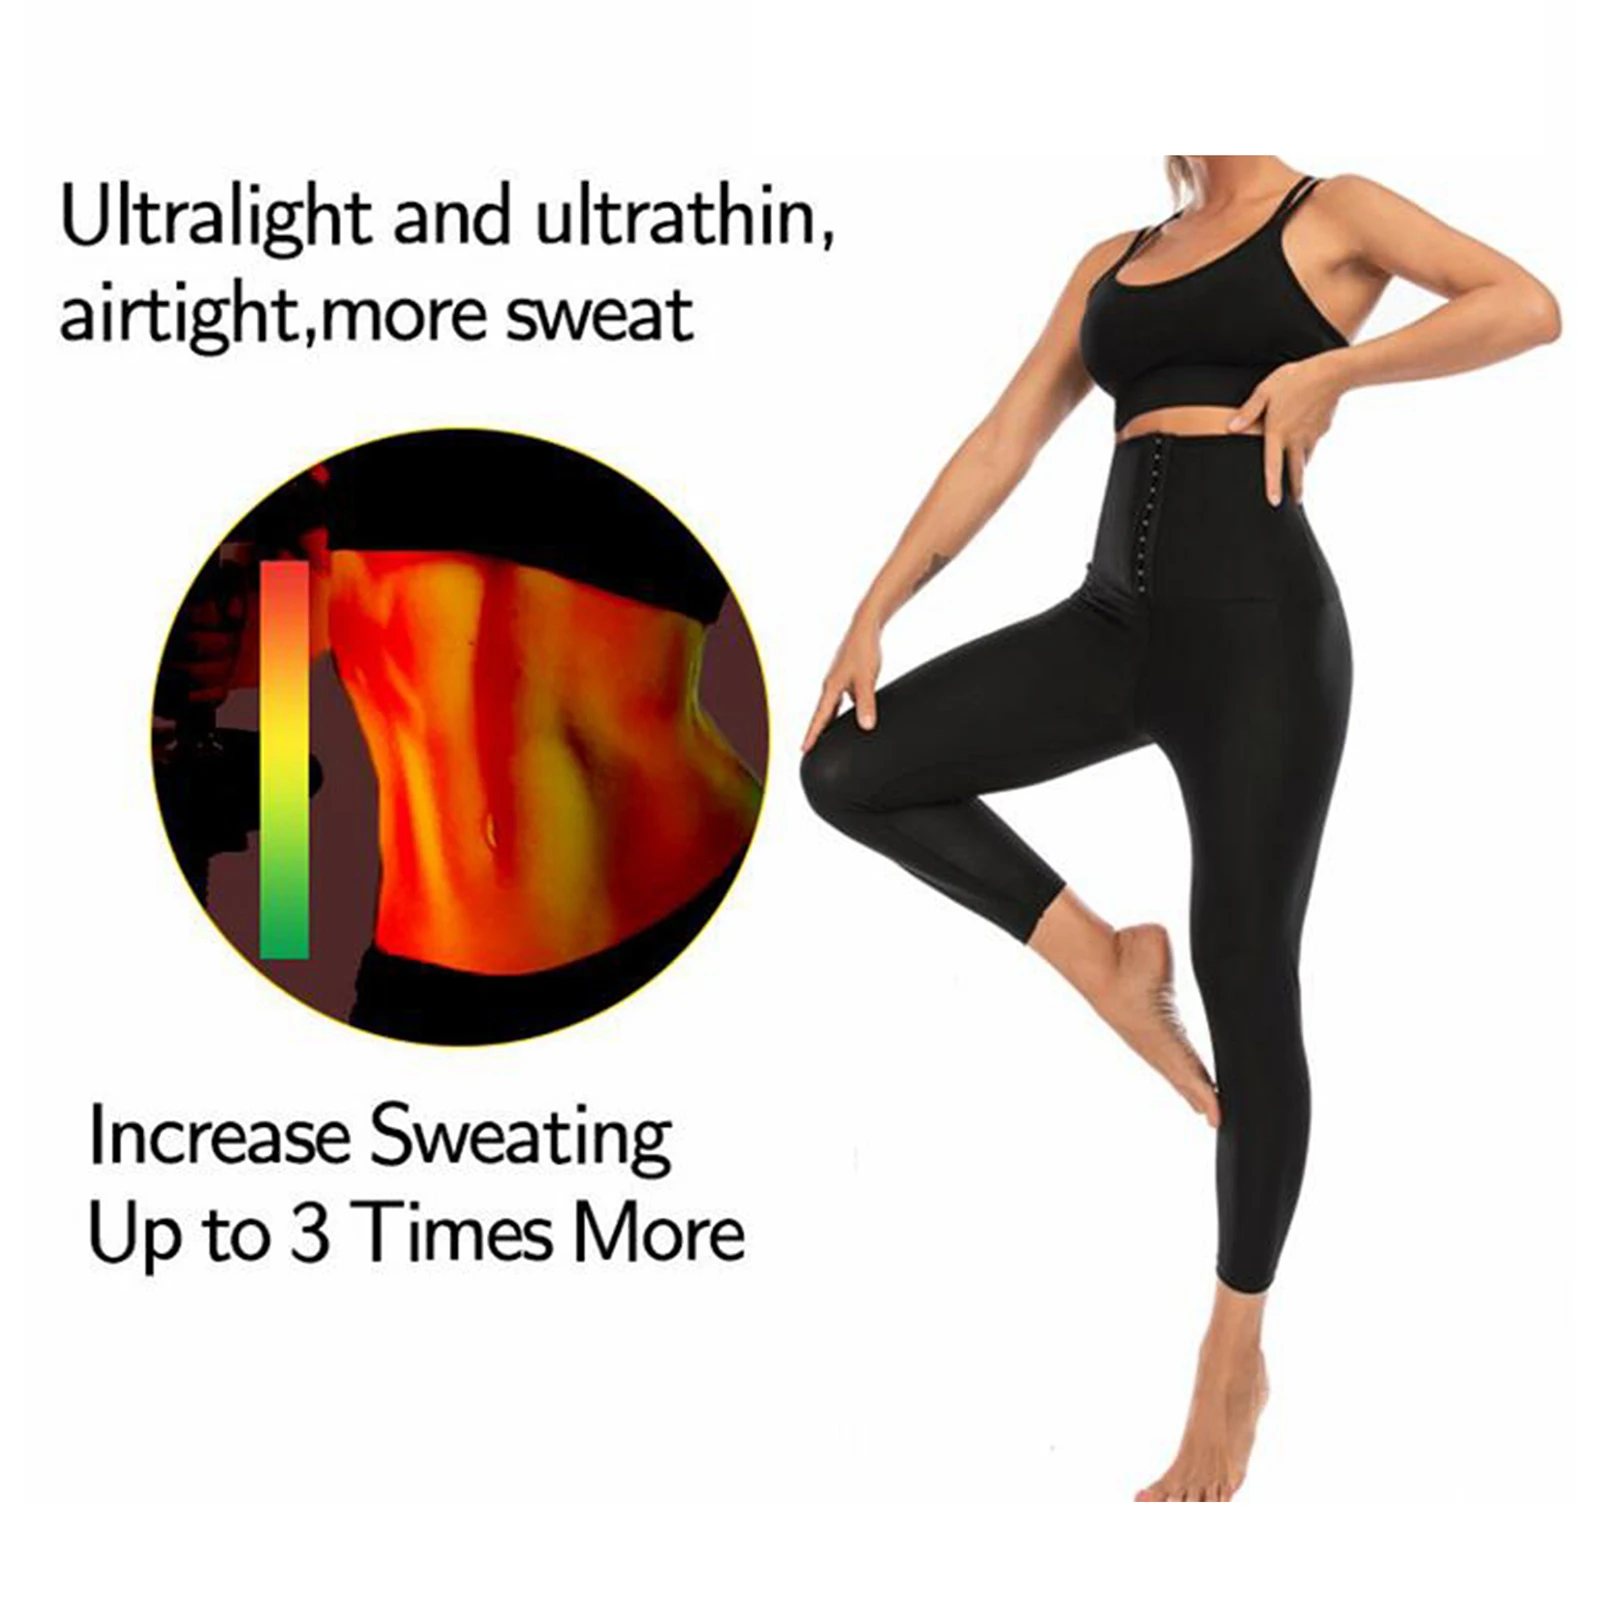 Women Sauna Pants Slimming Sweat Body Shaper Gym Fitness Weight Loss Hot Thermo Sweat Fat Burner Training Sports Shorts Pants